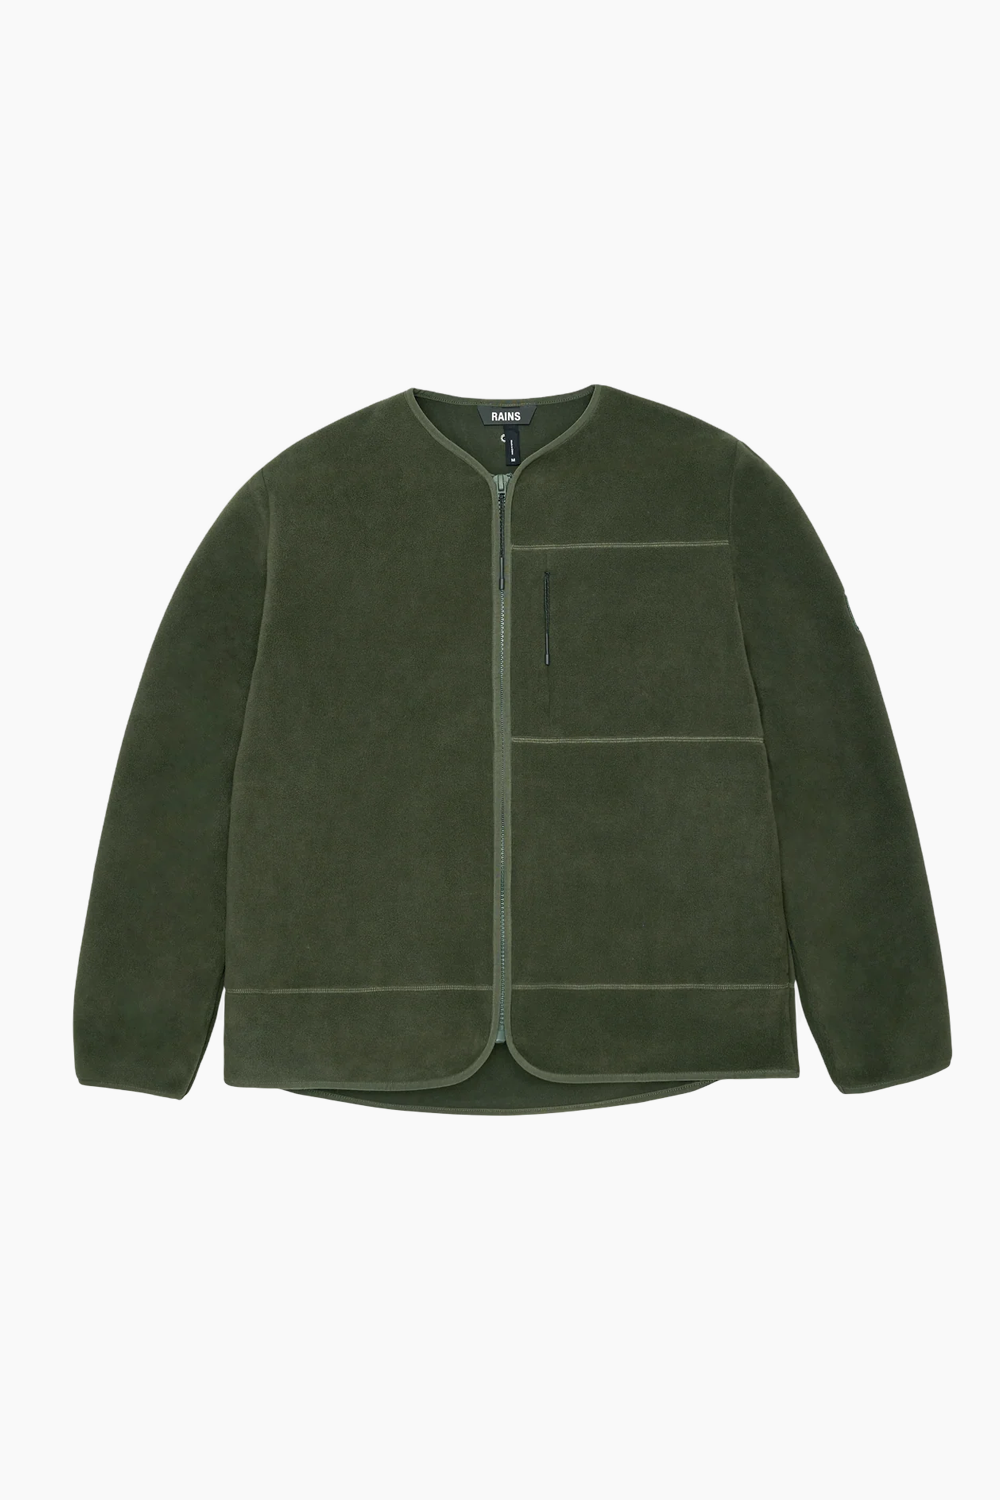 Fleece Jacket T1 - Green - Rains